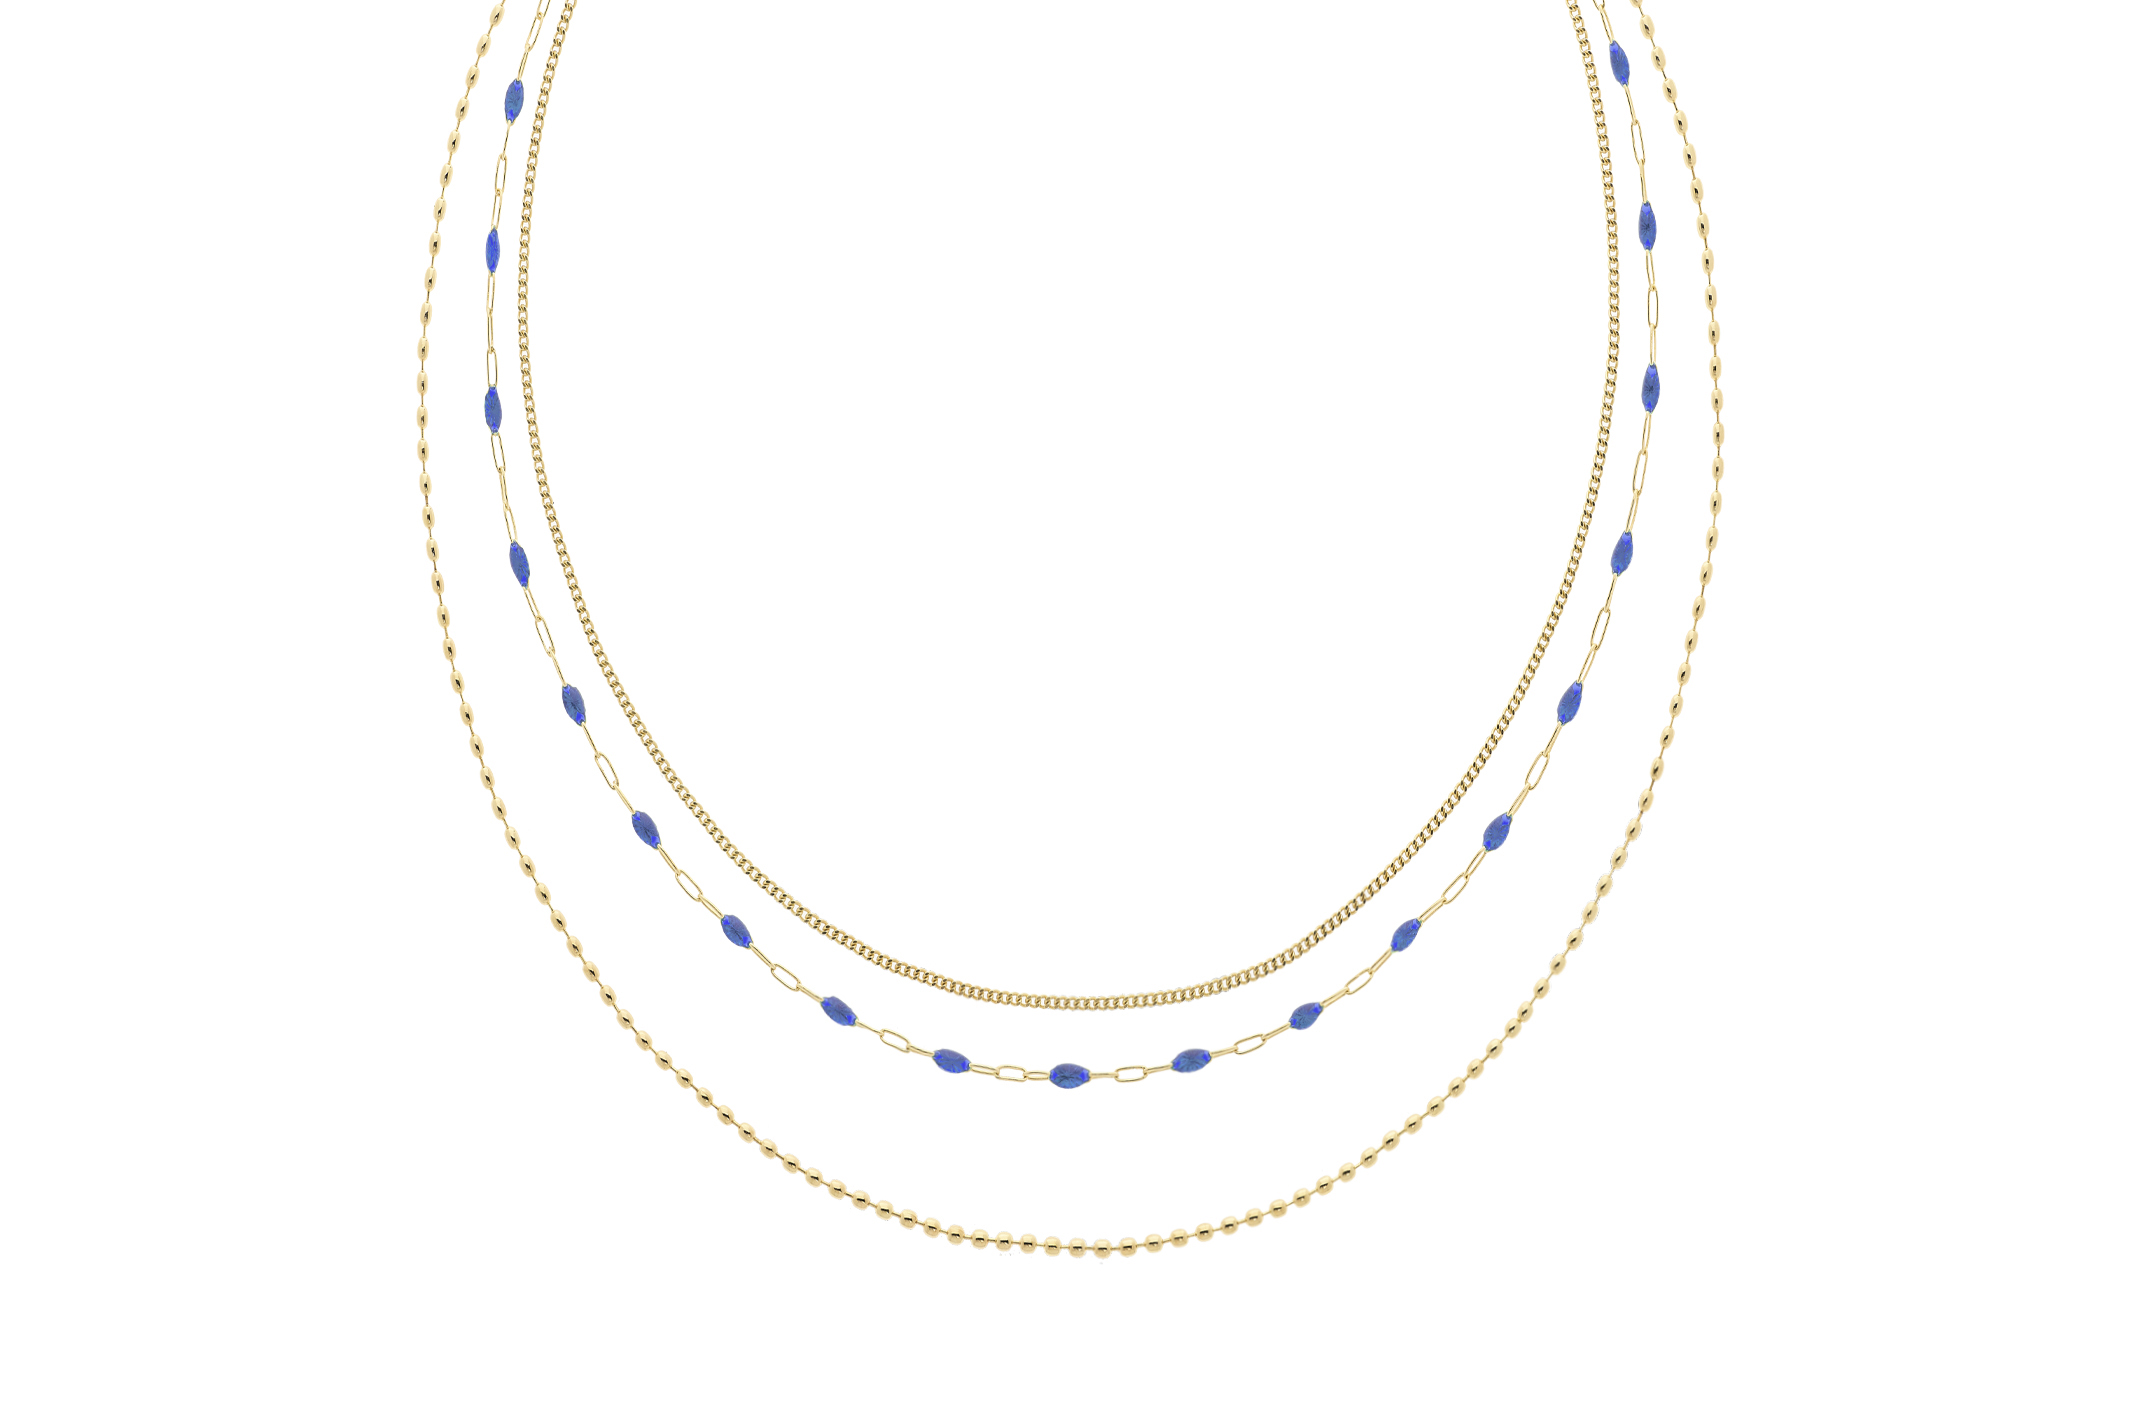 Joia: colar;Material: prata 925;Peso: 7.7 gr;Cor: amarelo;Medida: 38 cm + 5 cm